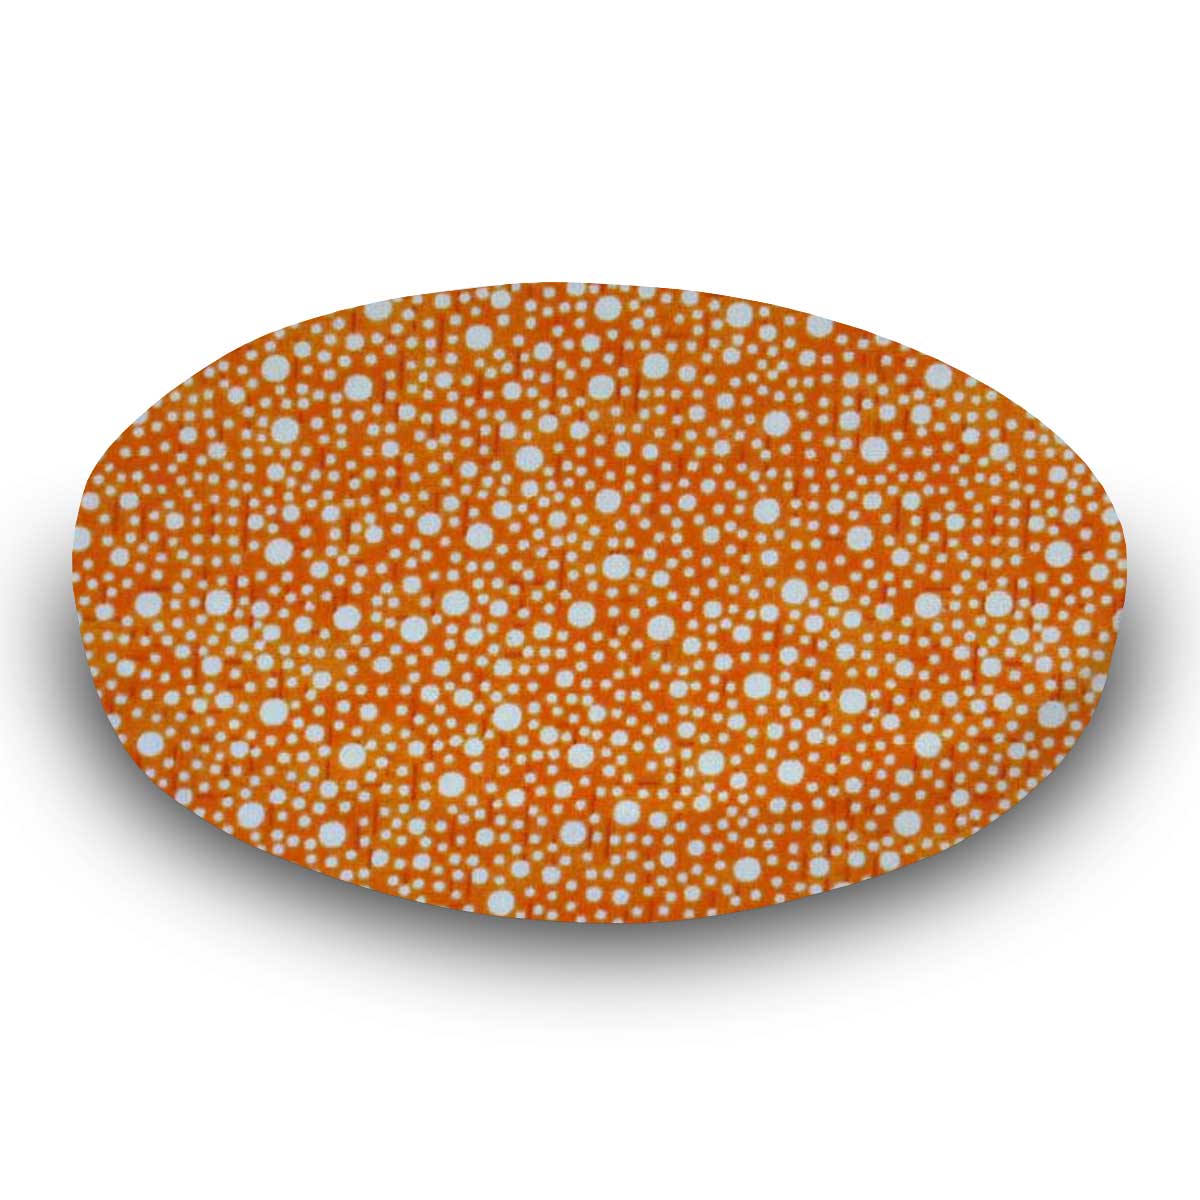 SK-W1124 Oval Crib (Stokke Sleepi) - Confetti Dots Orange - sku SK-W1124